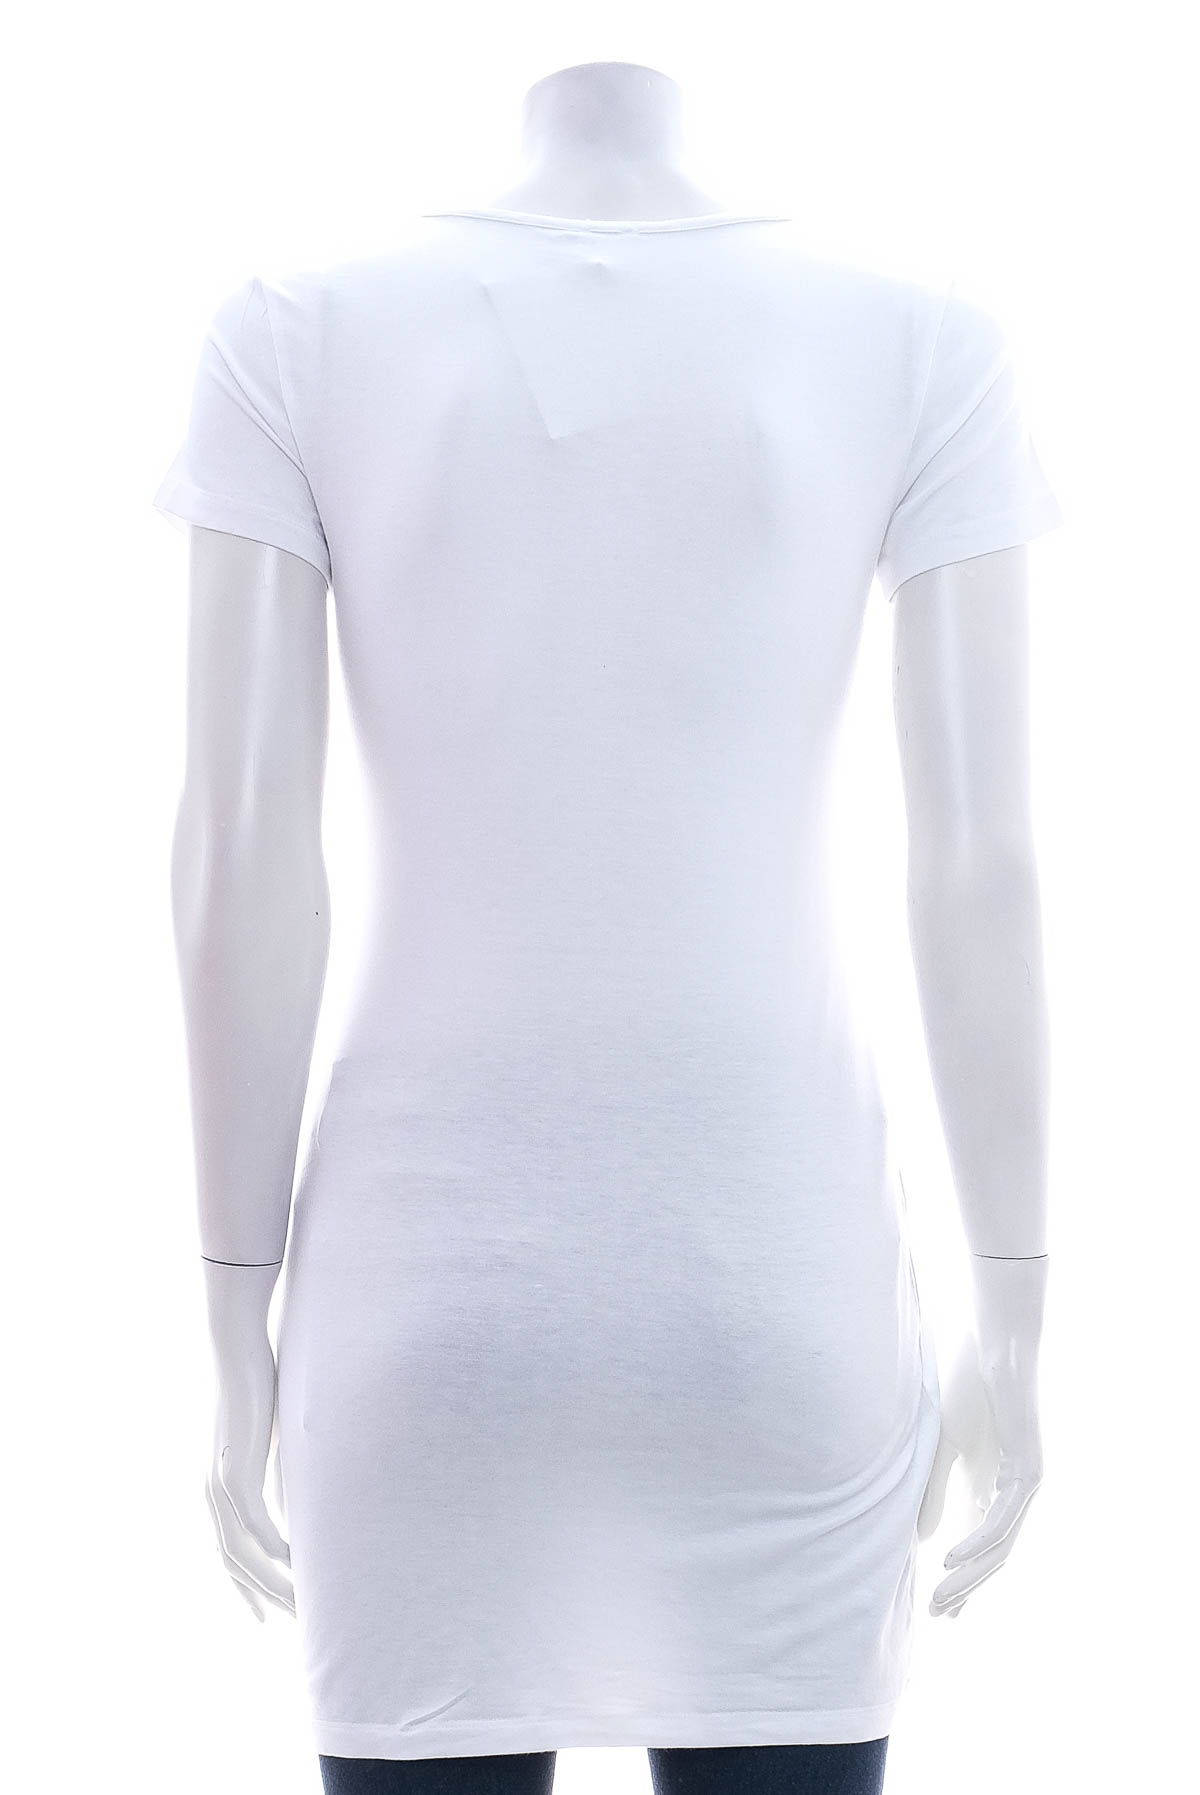 Women's t-shirt - Alba Moda - 1